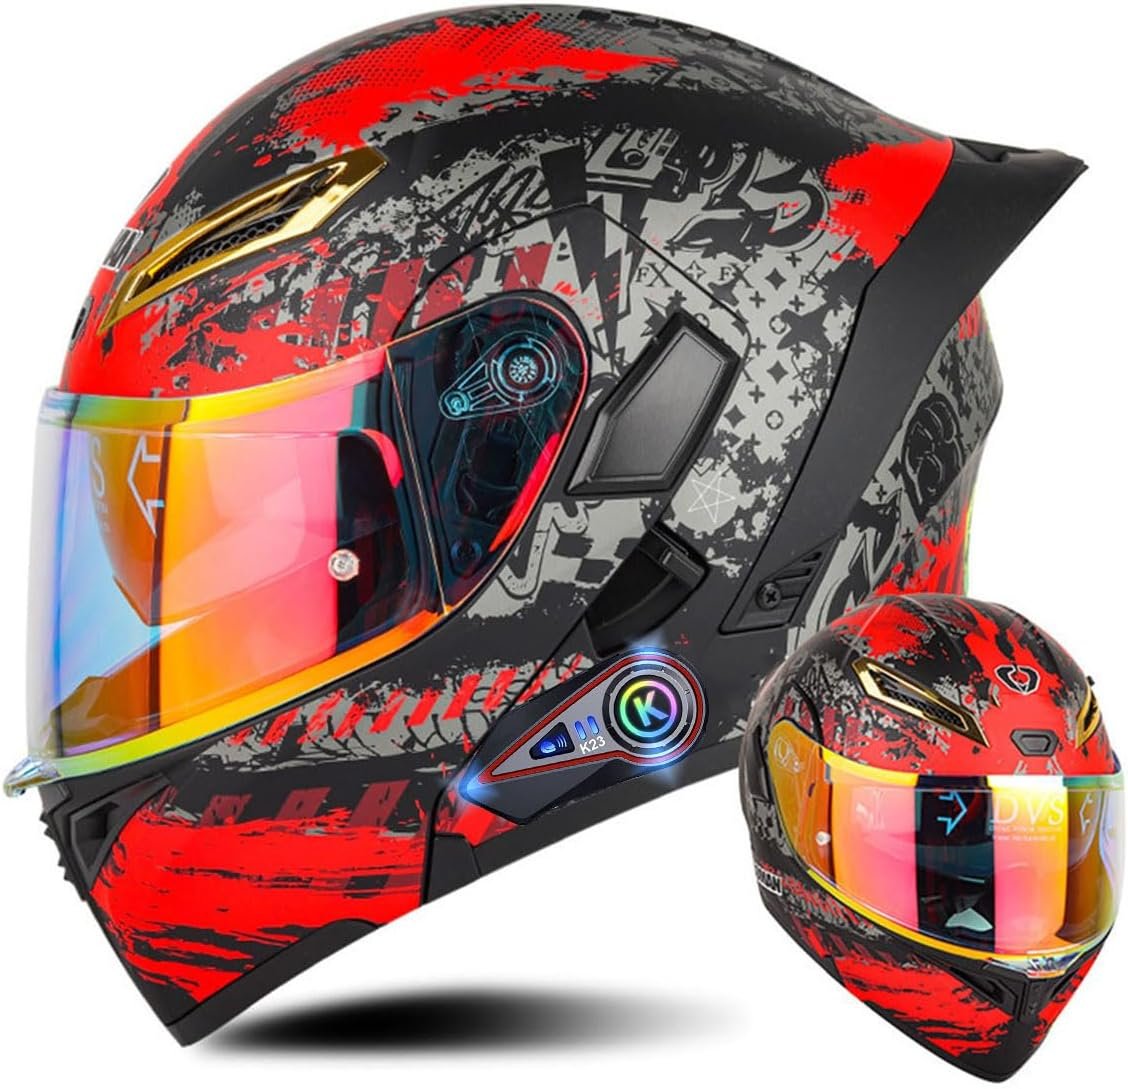 Bluetooth Modular Motorcycle Helmet Review